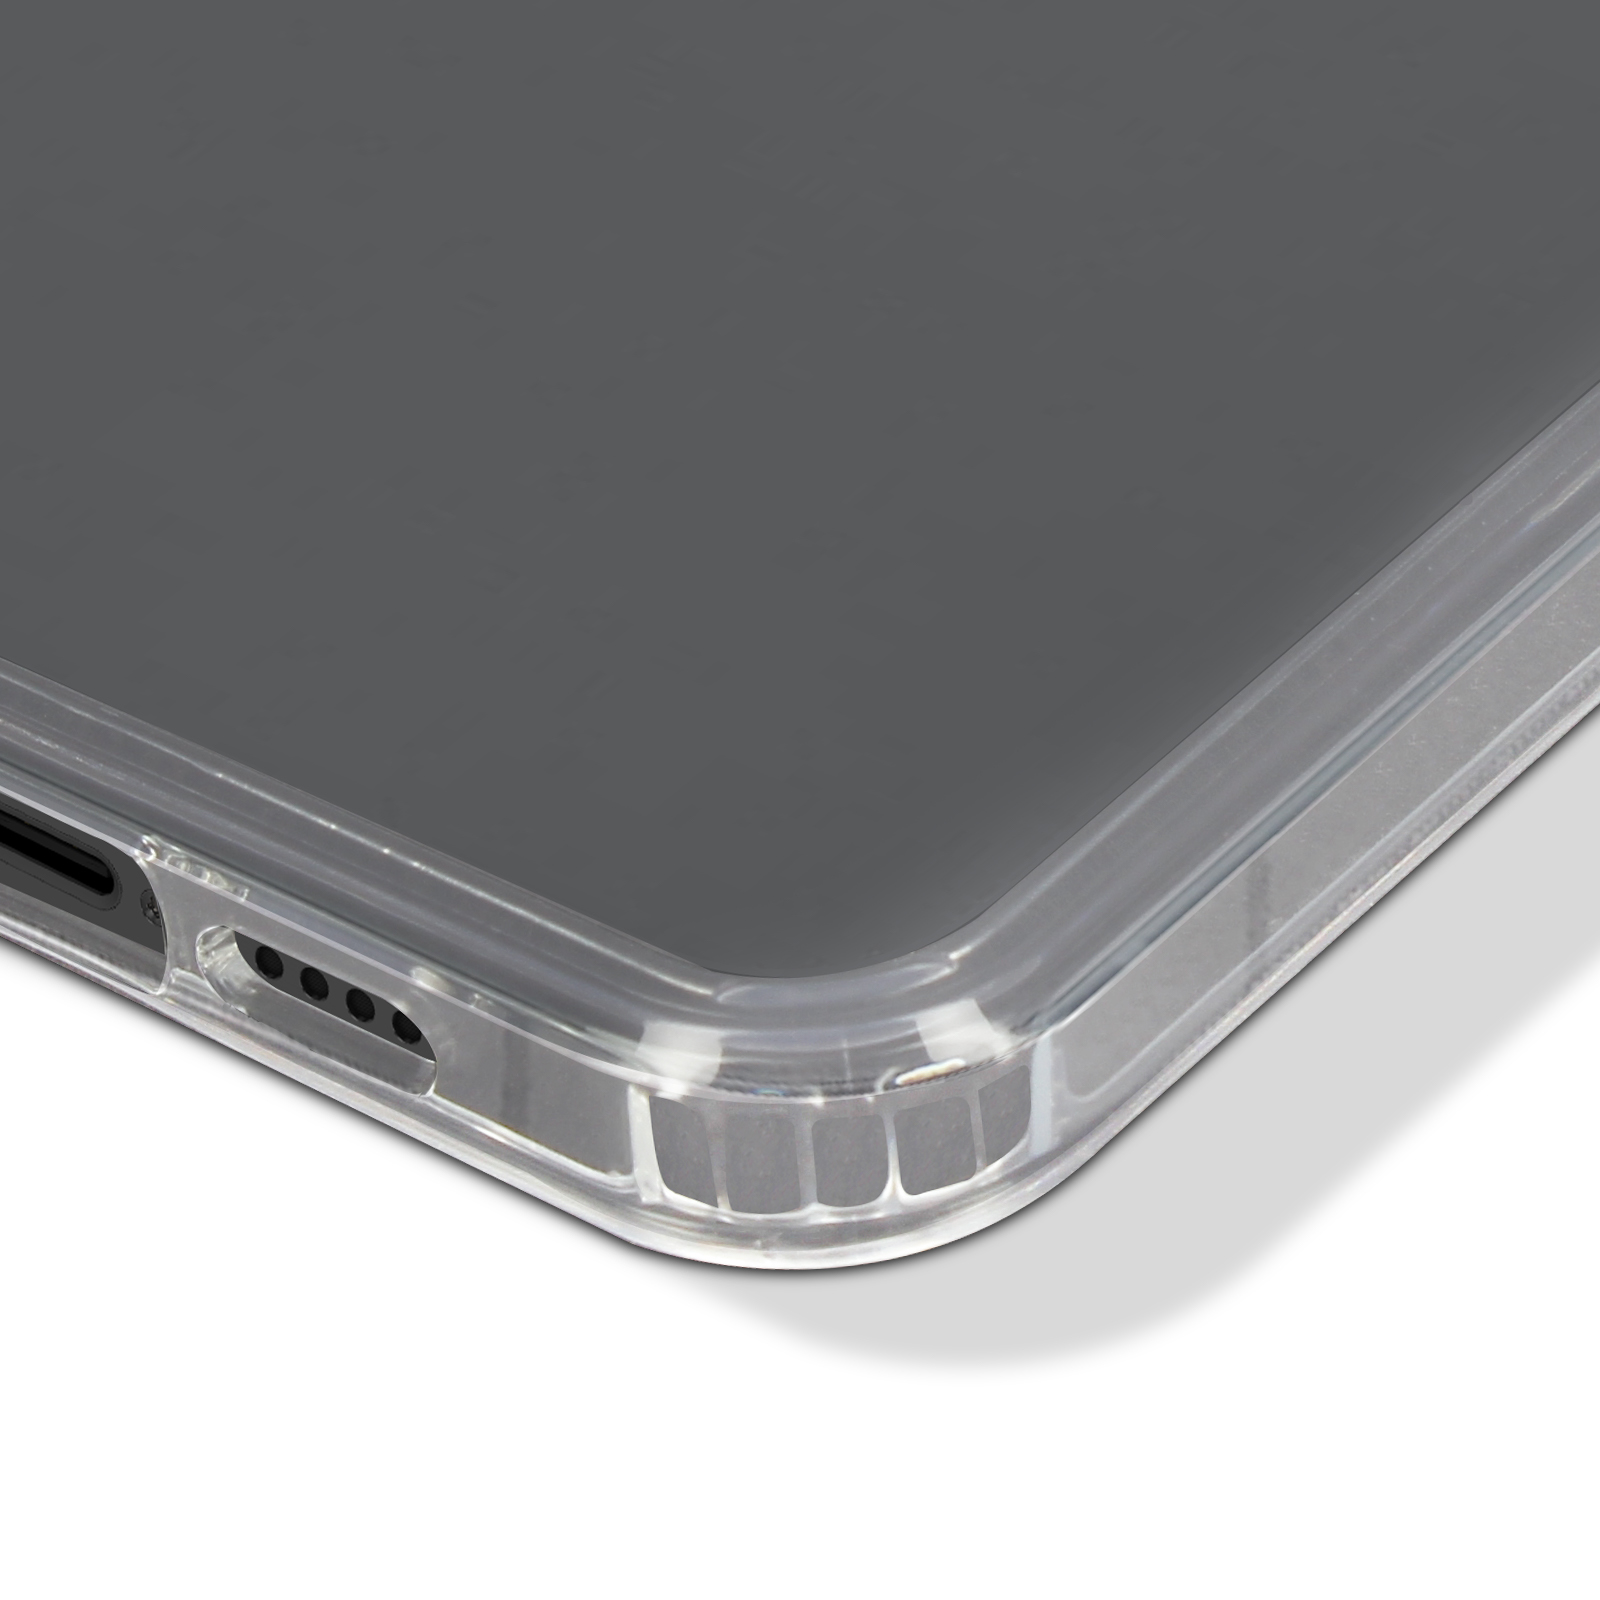 Carcasa Iphone XS Transparente Antigolpe